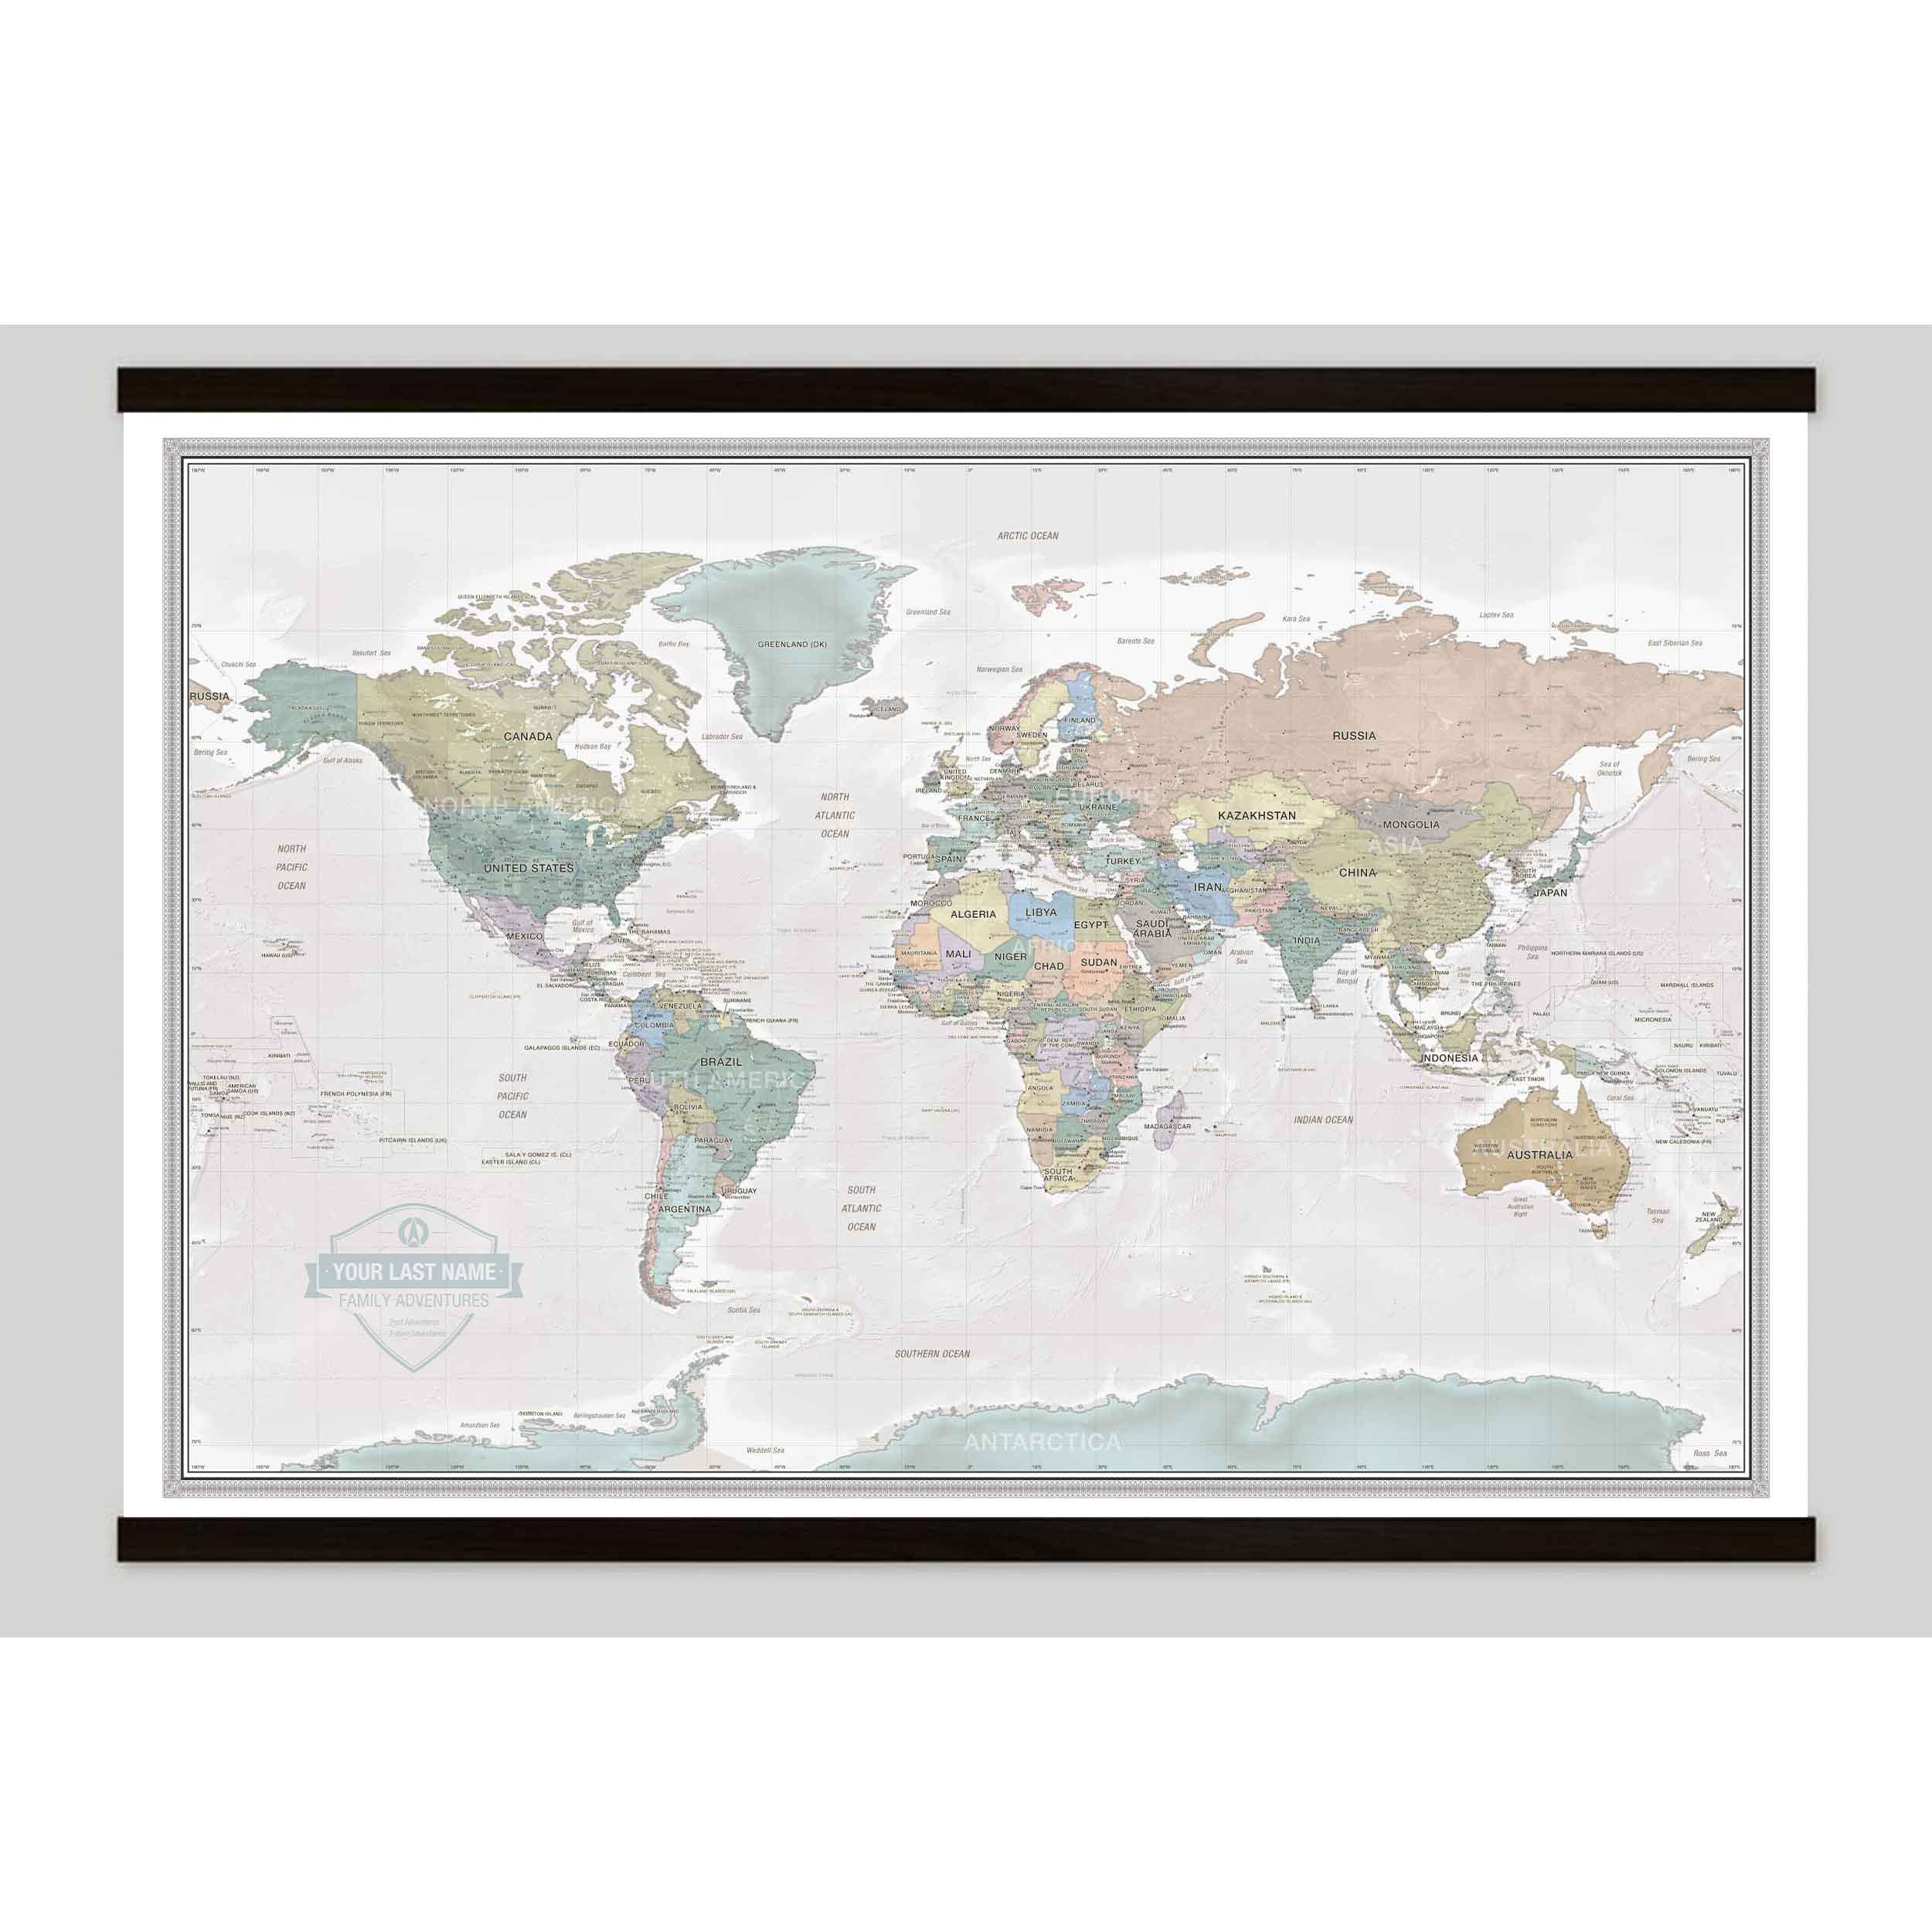 Pastel wall art push pin world map with personalized legend